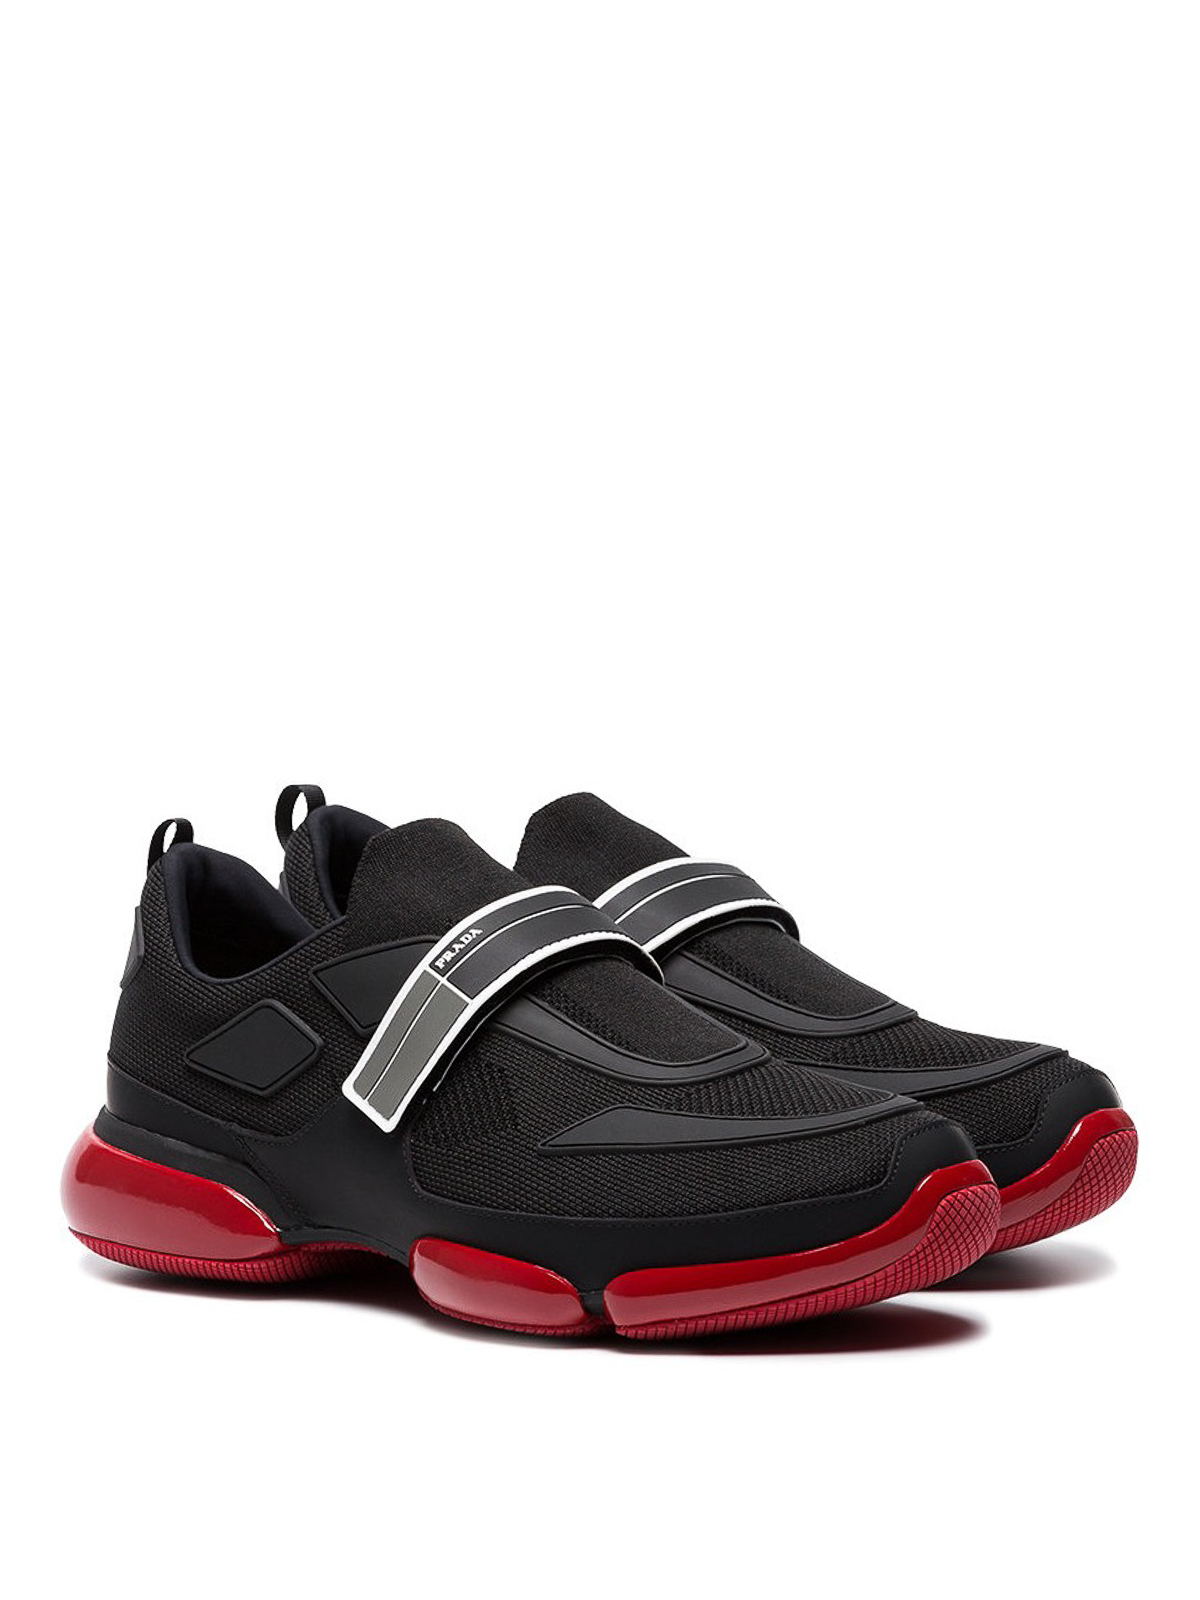 Trainers Prada - Cloudburst sneakers - 2OG0641OUFF002L | iKRIX.com